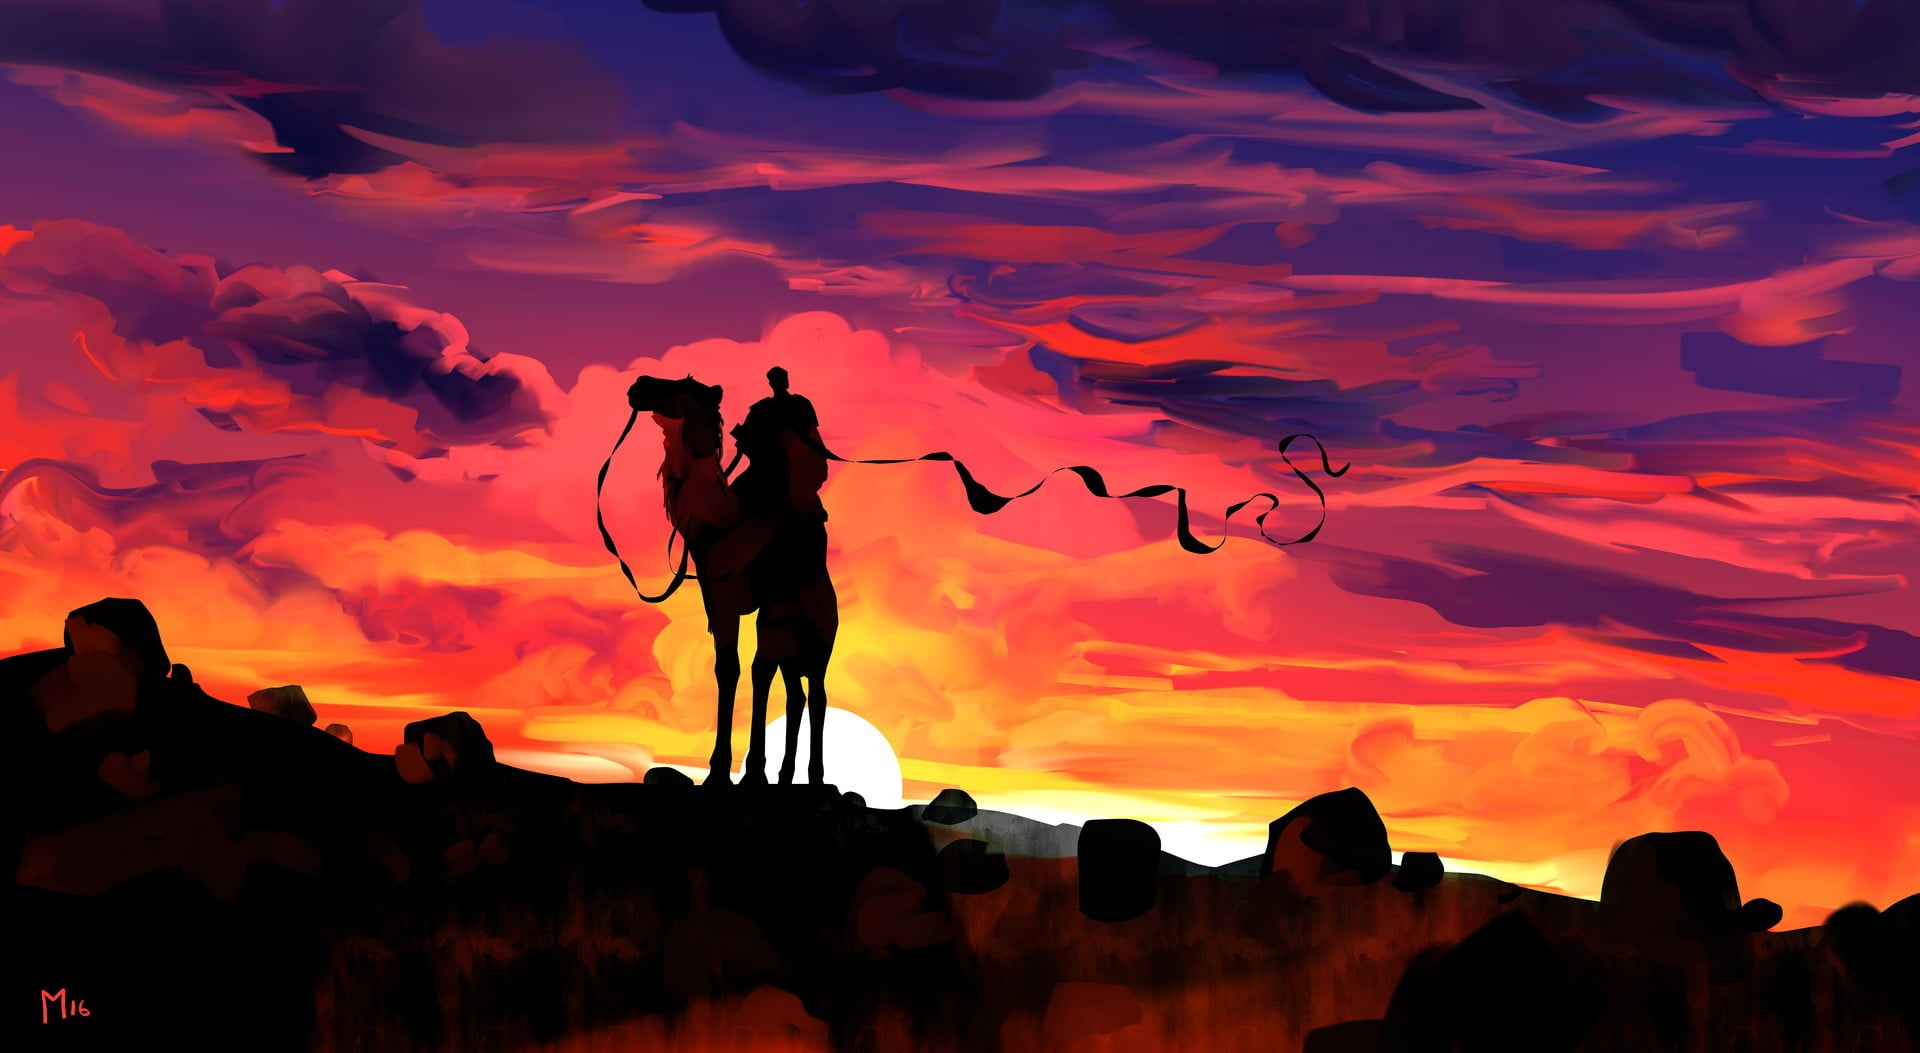 Person riding on camel painting, illustration, fantasy art, sunset